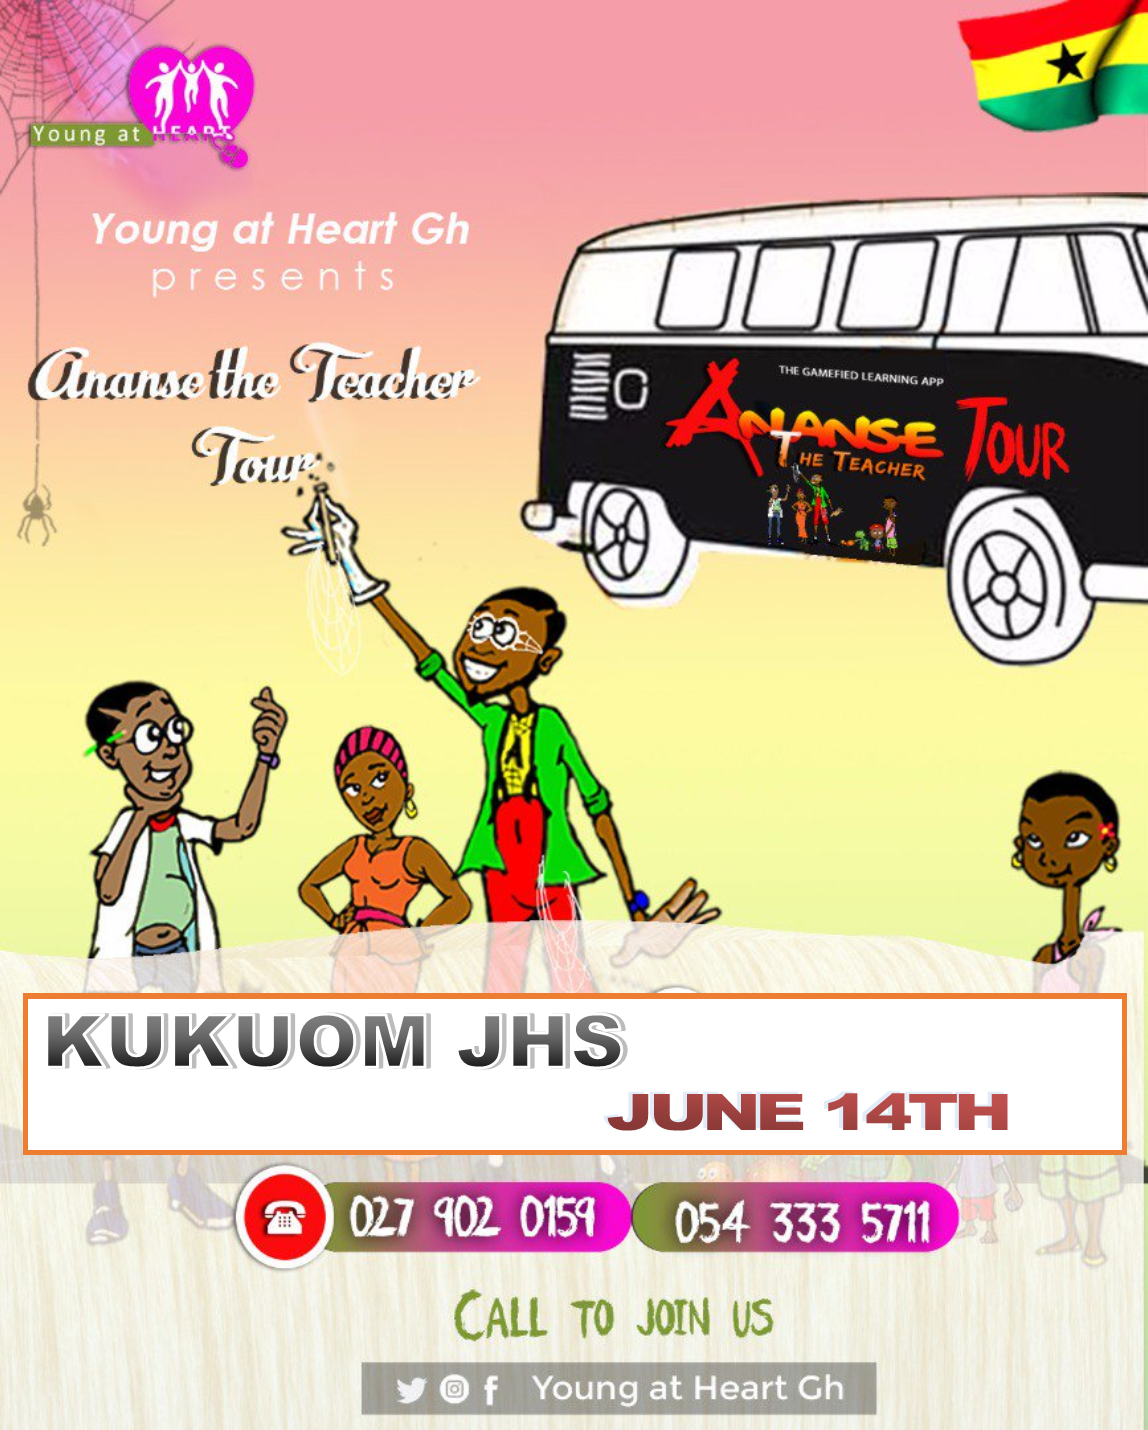 Young At Heart brings Digital Educational platforms to Kukuom.